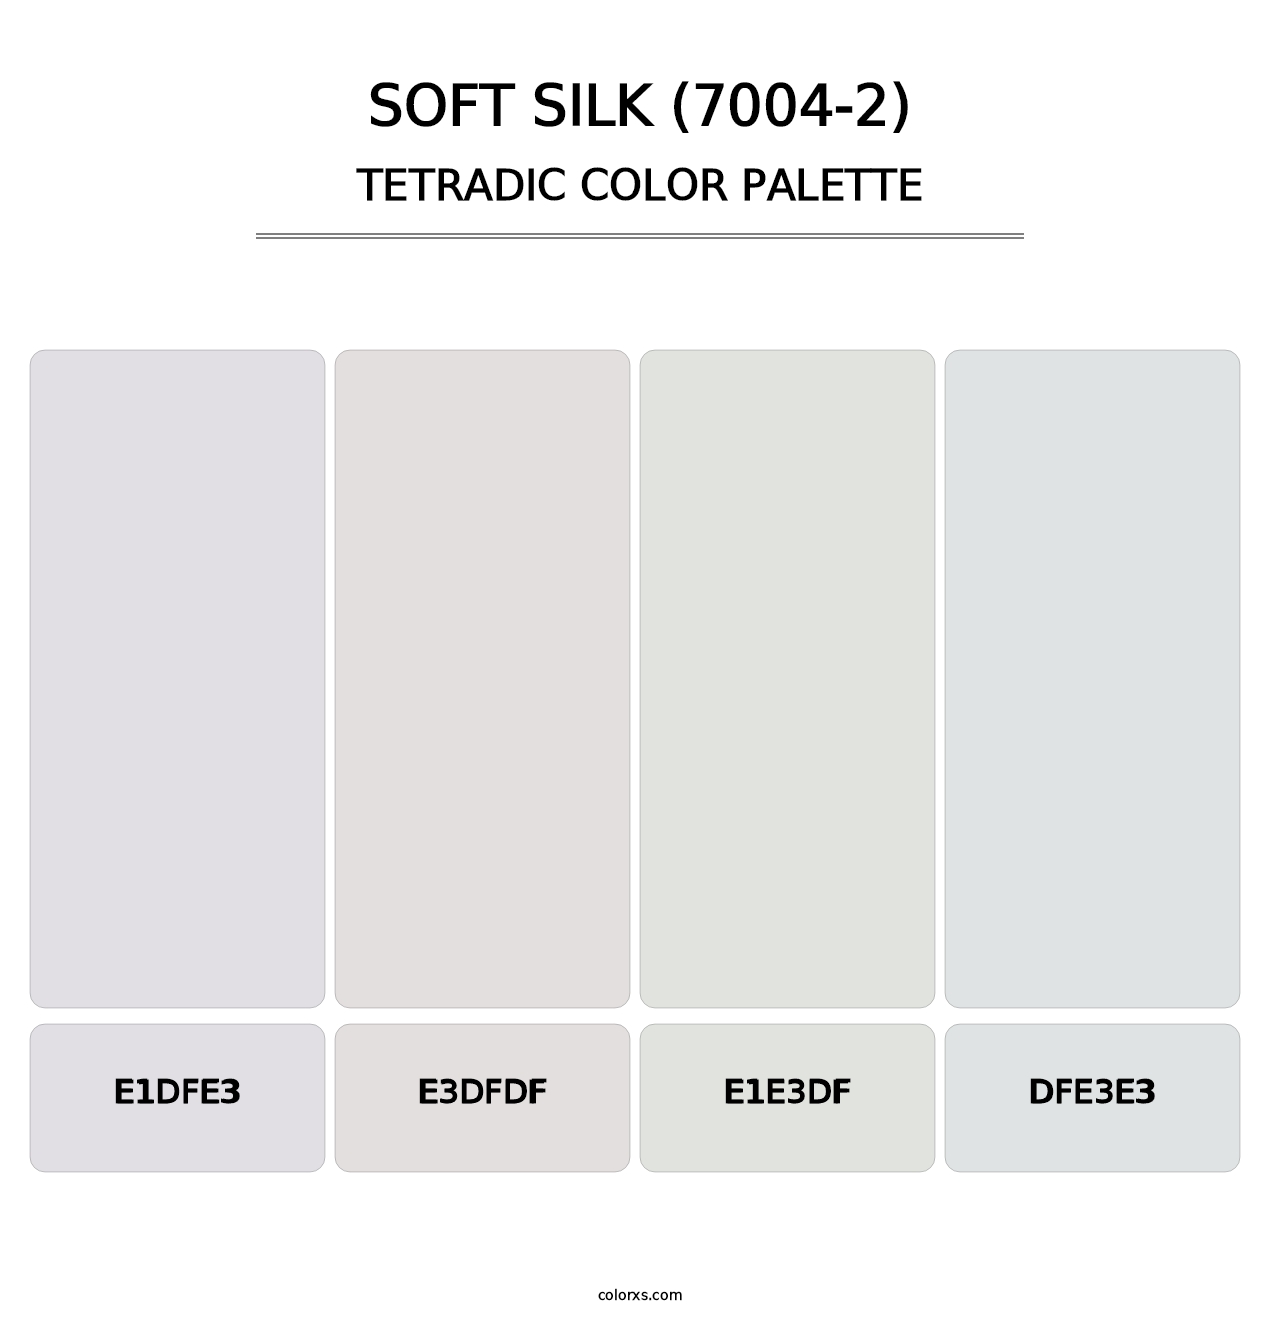 Soft Silk (7004-2) - Tetradic Color Palette